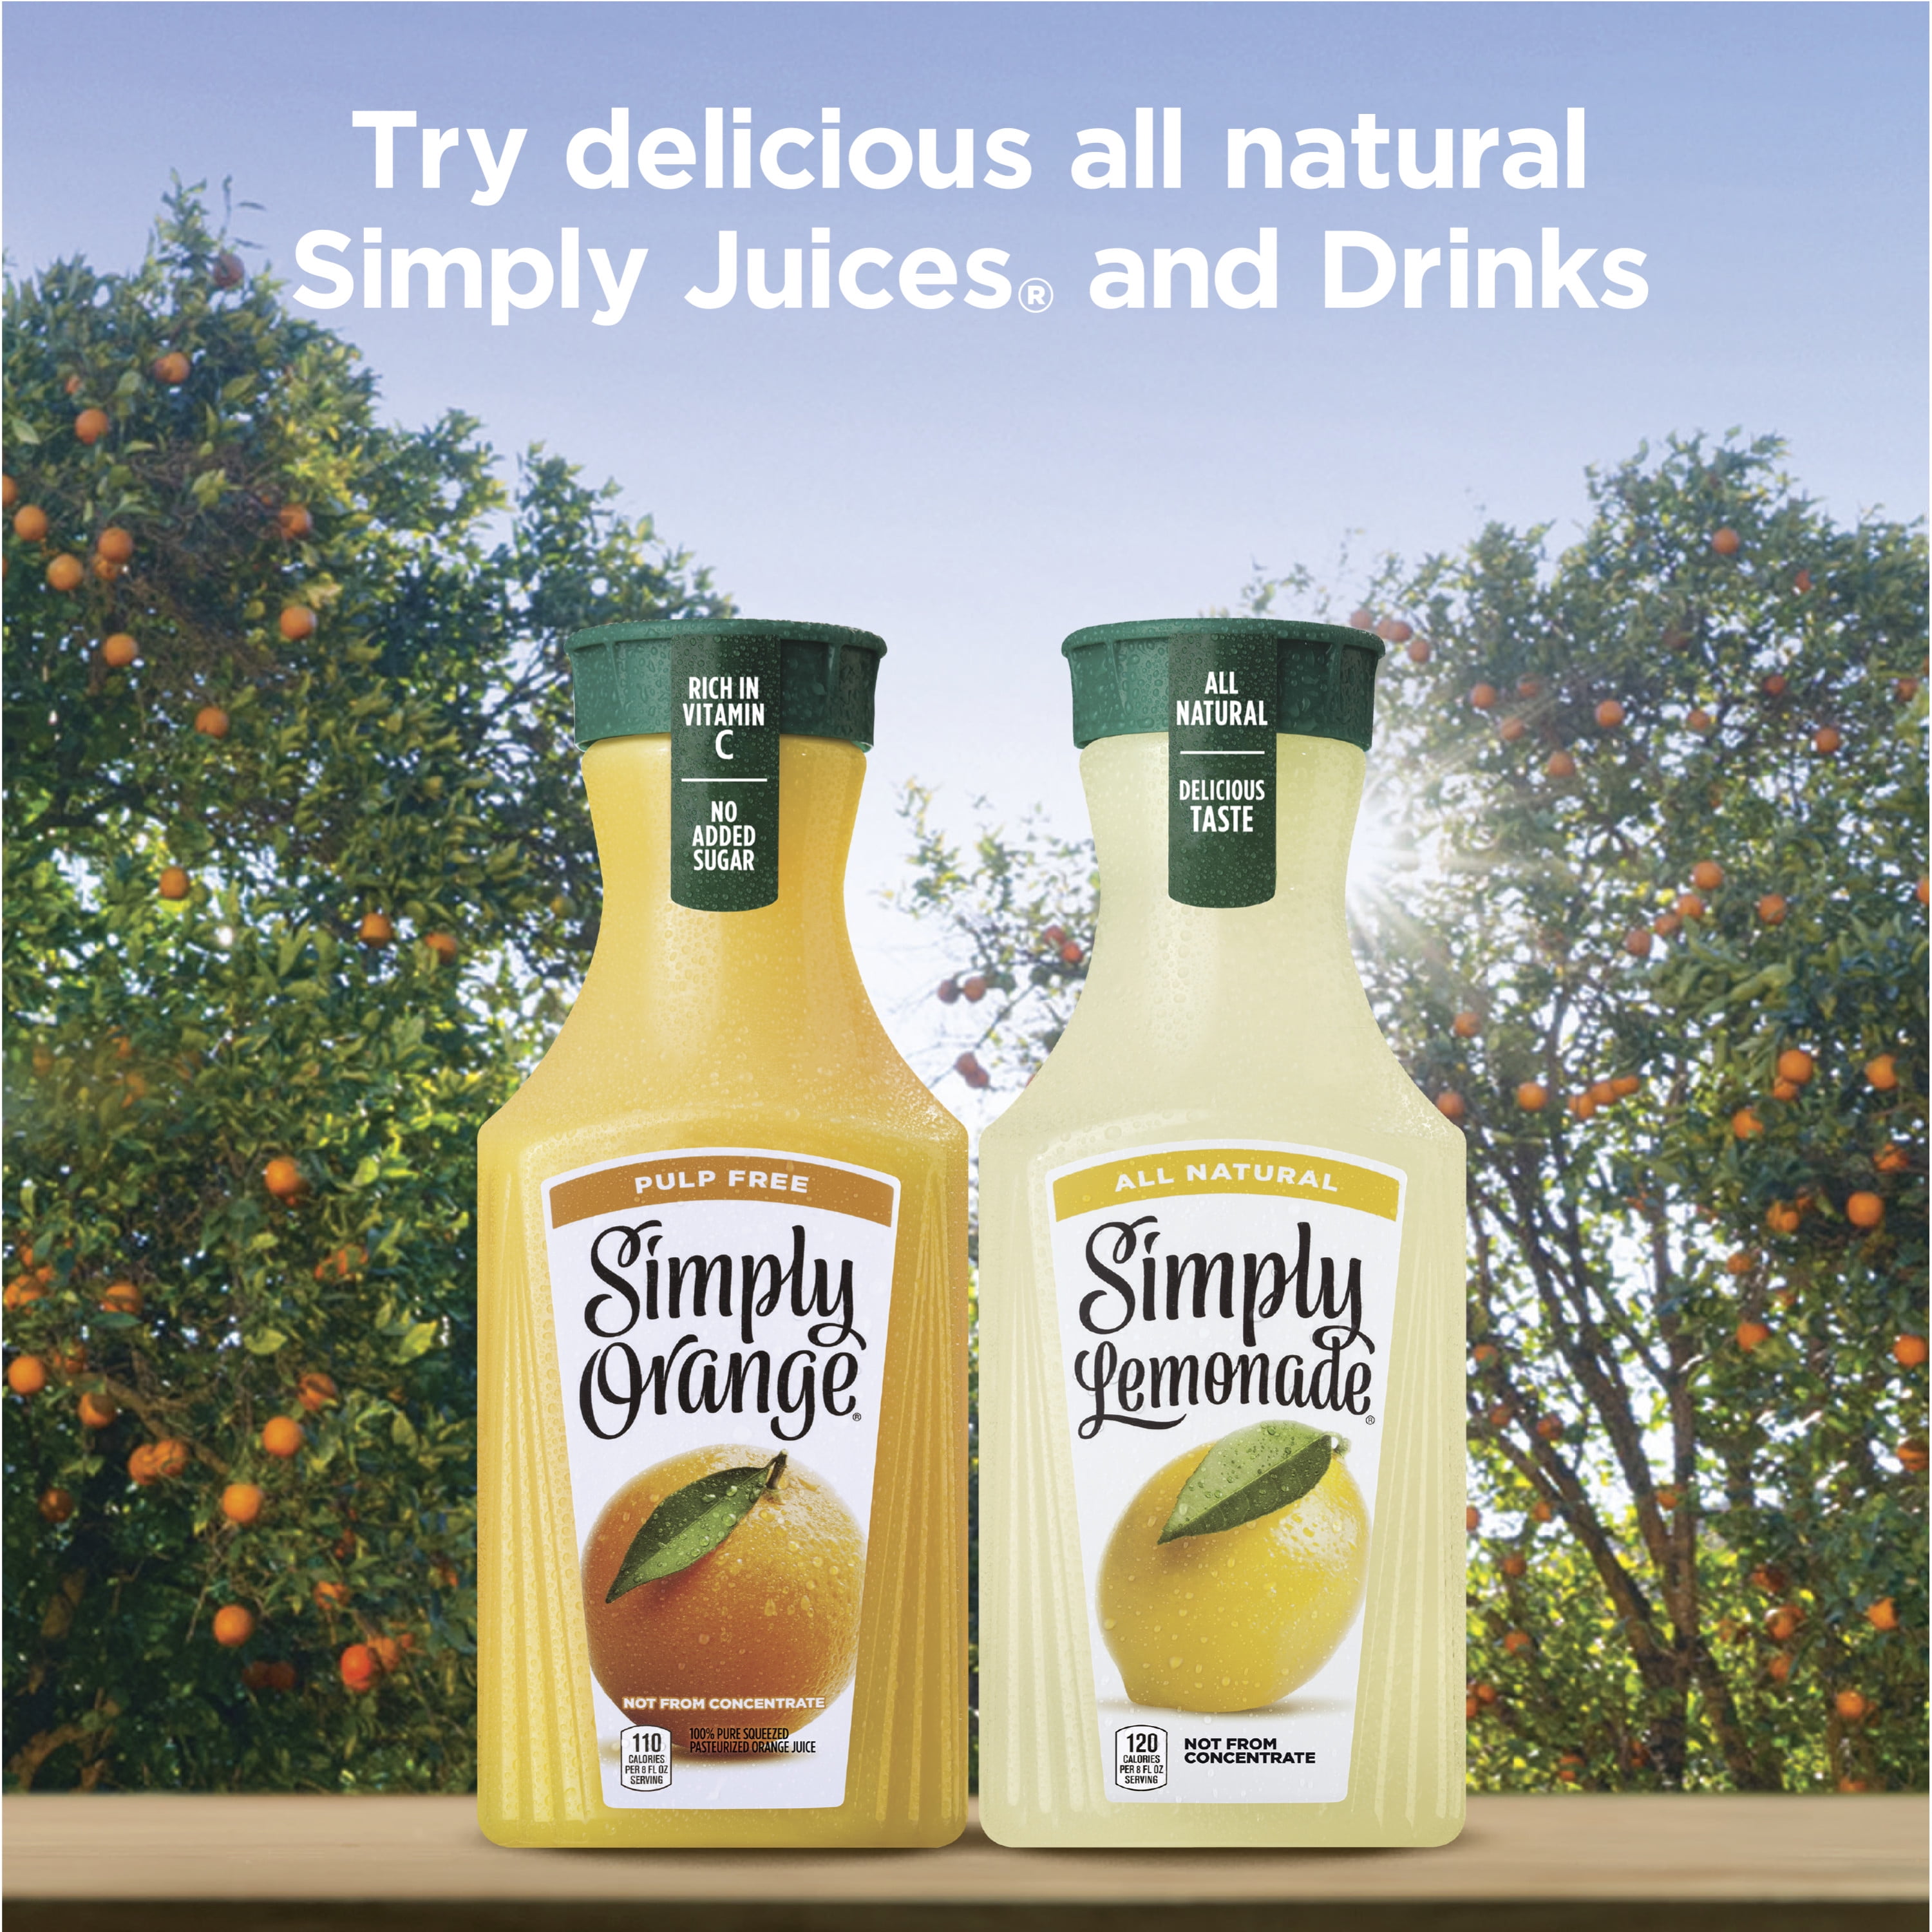 Simply Orange Pulp Free Orange Juice 52 Oz Pack Of 2 Bottles - Office Depot